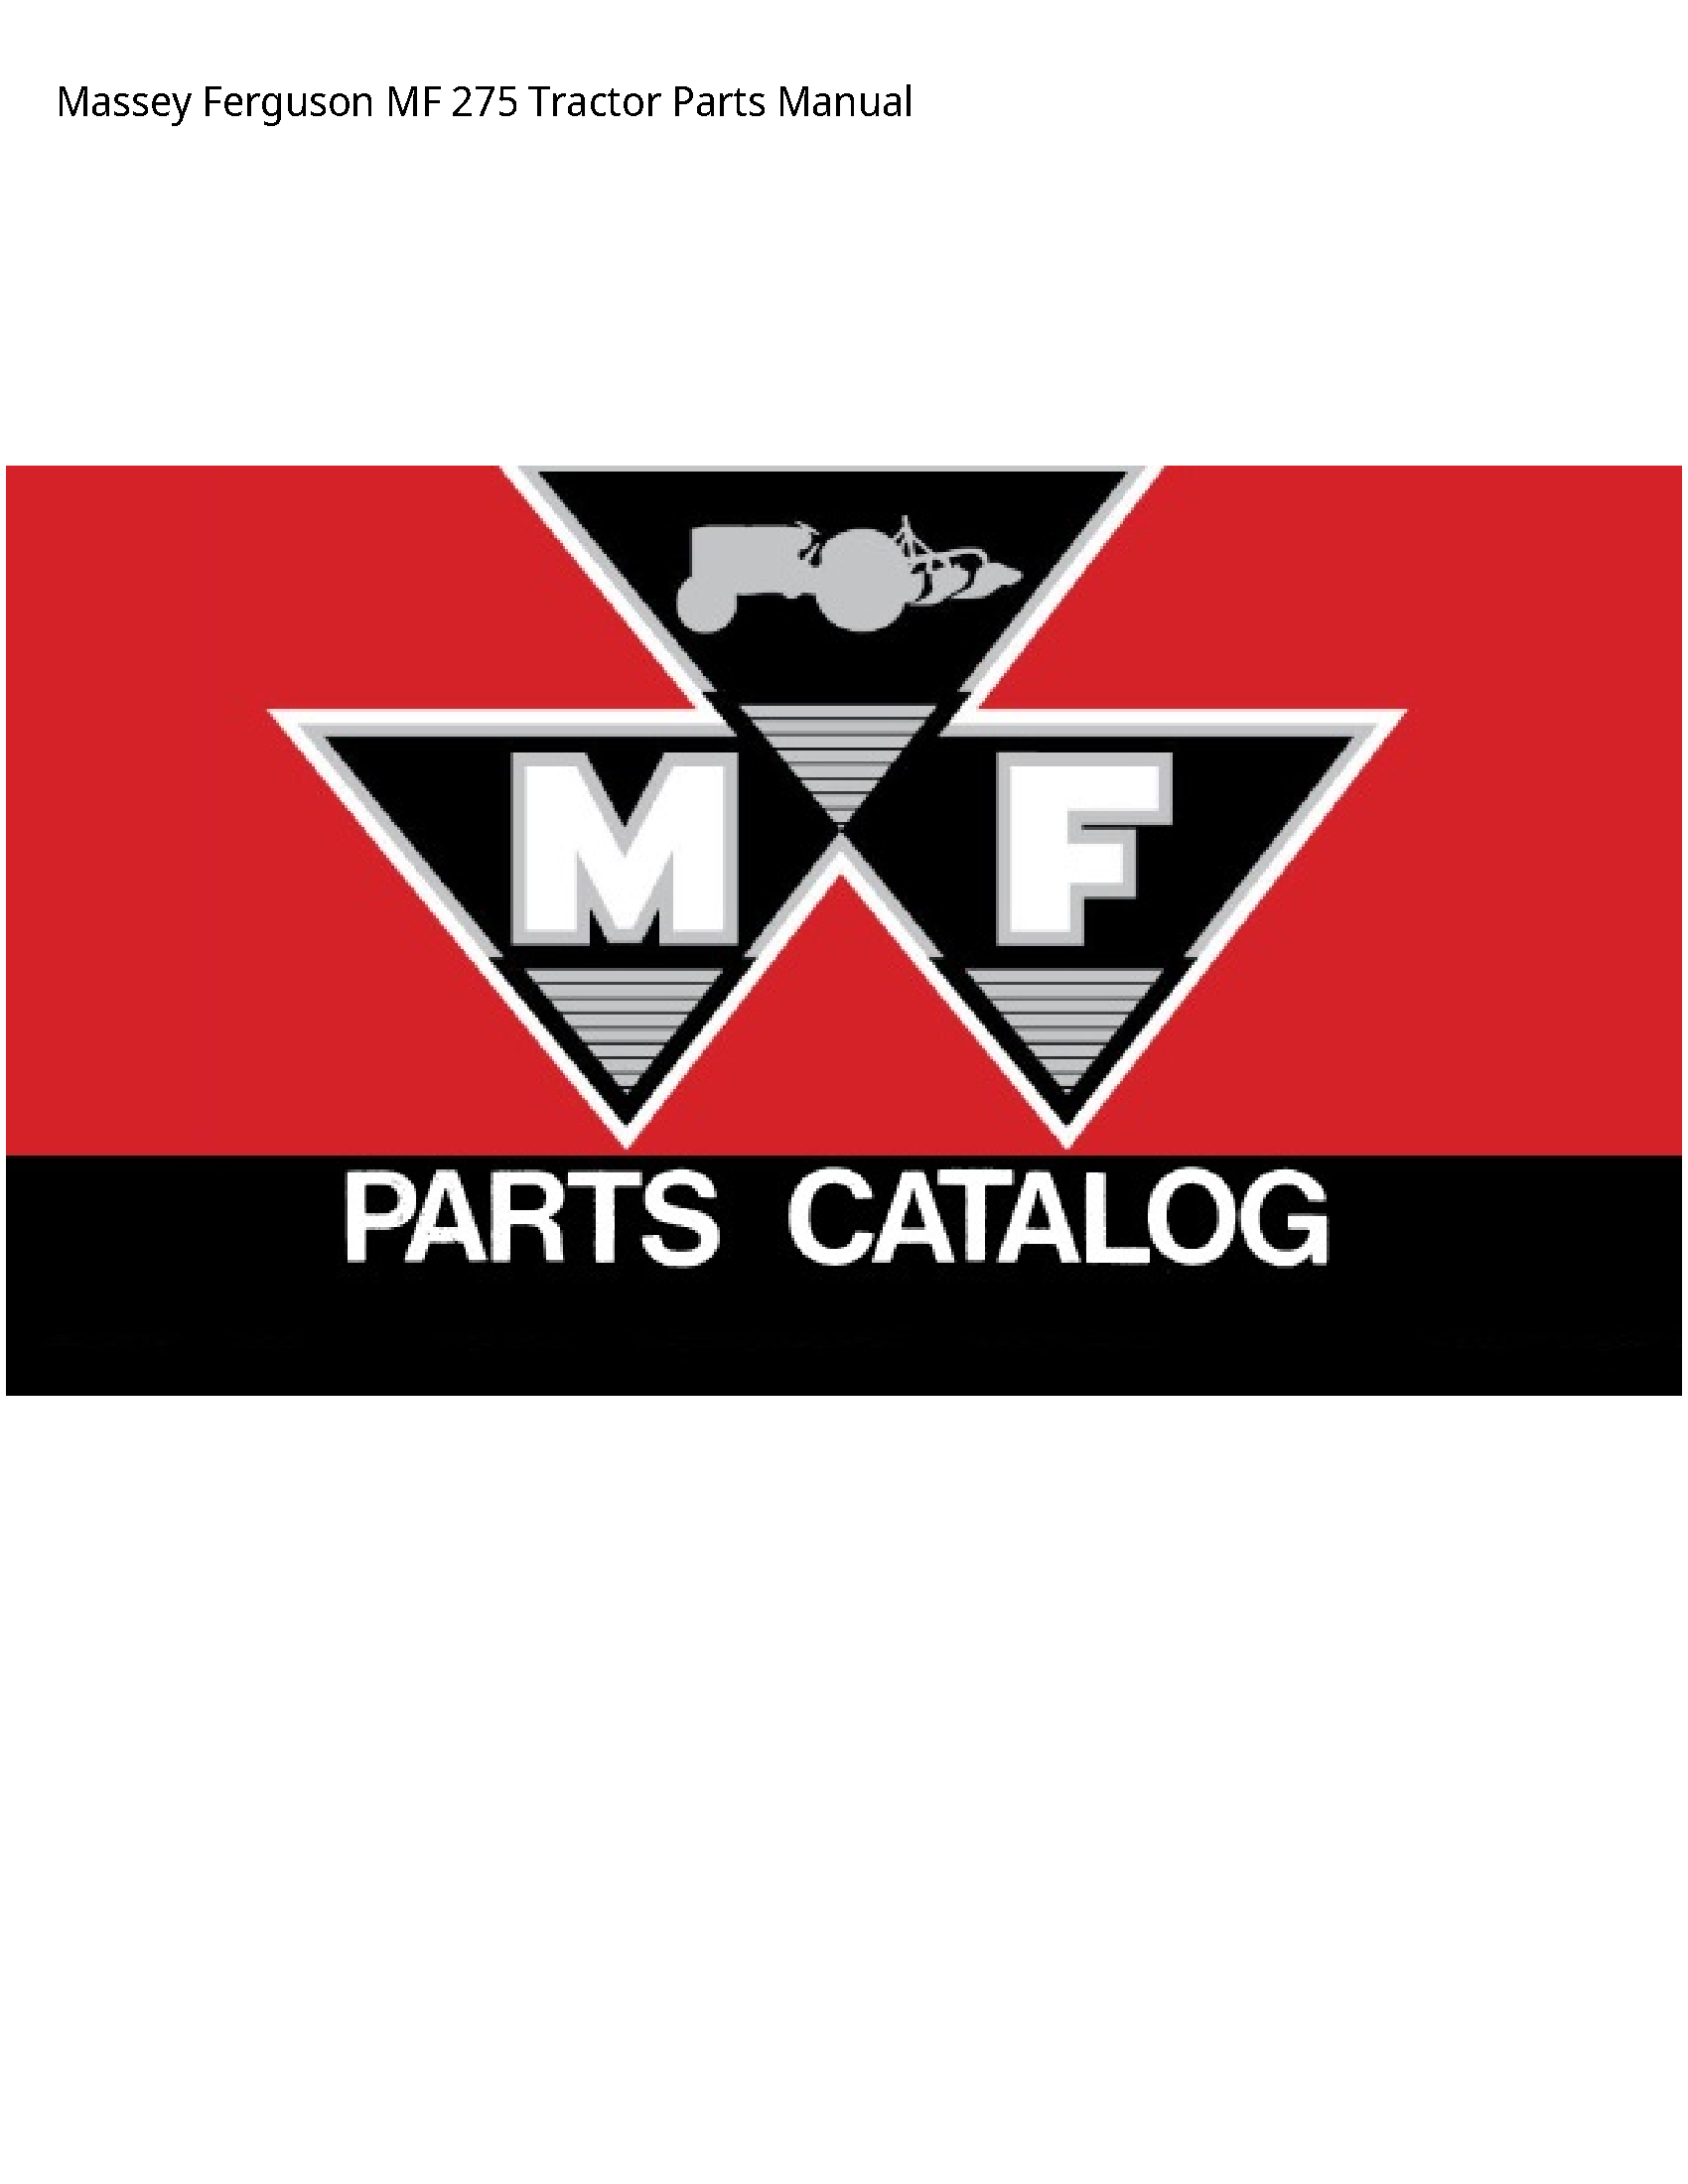 Massey Ferguson 275 MF Tractor Parts manual